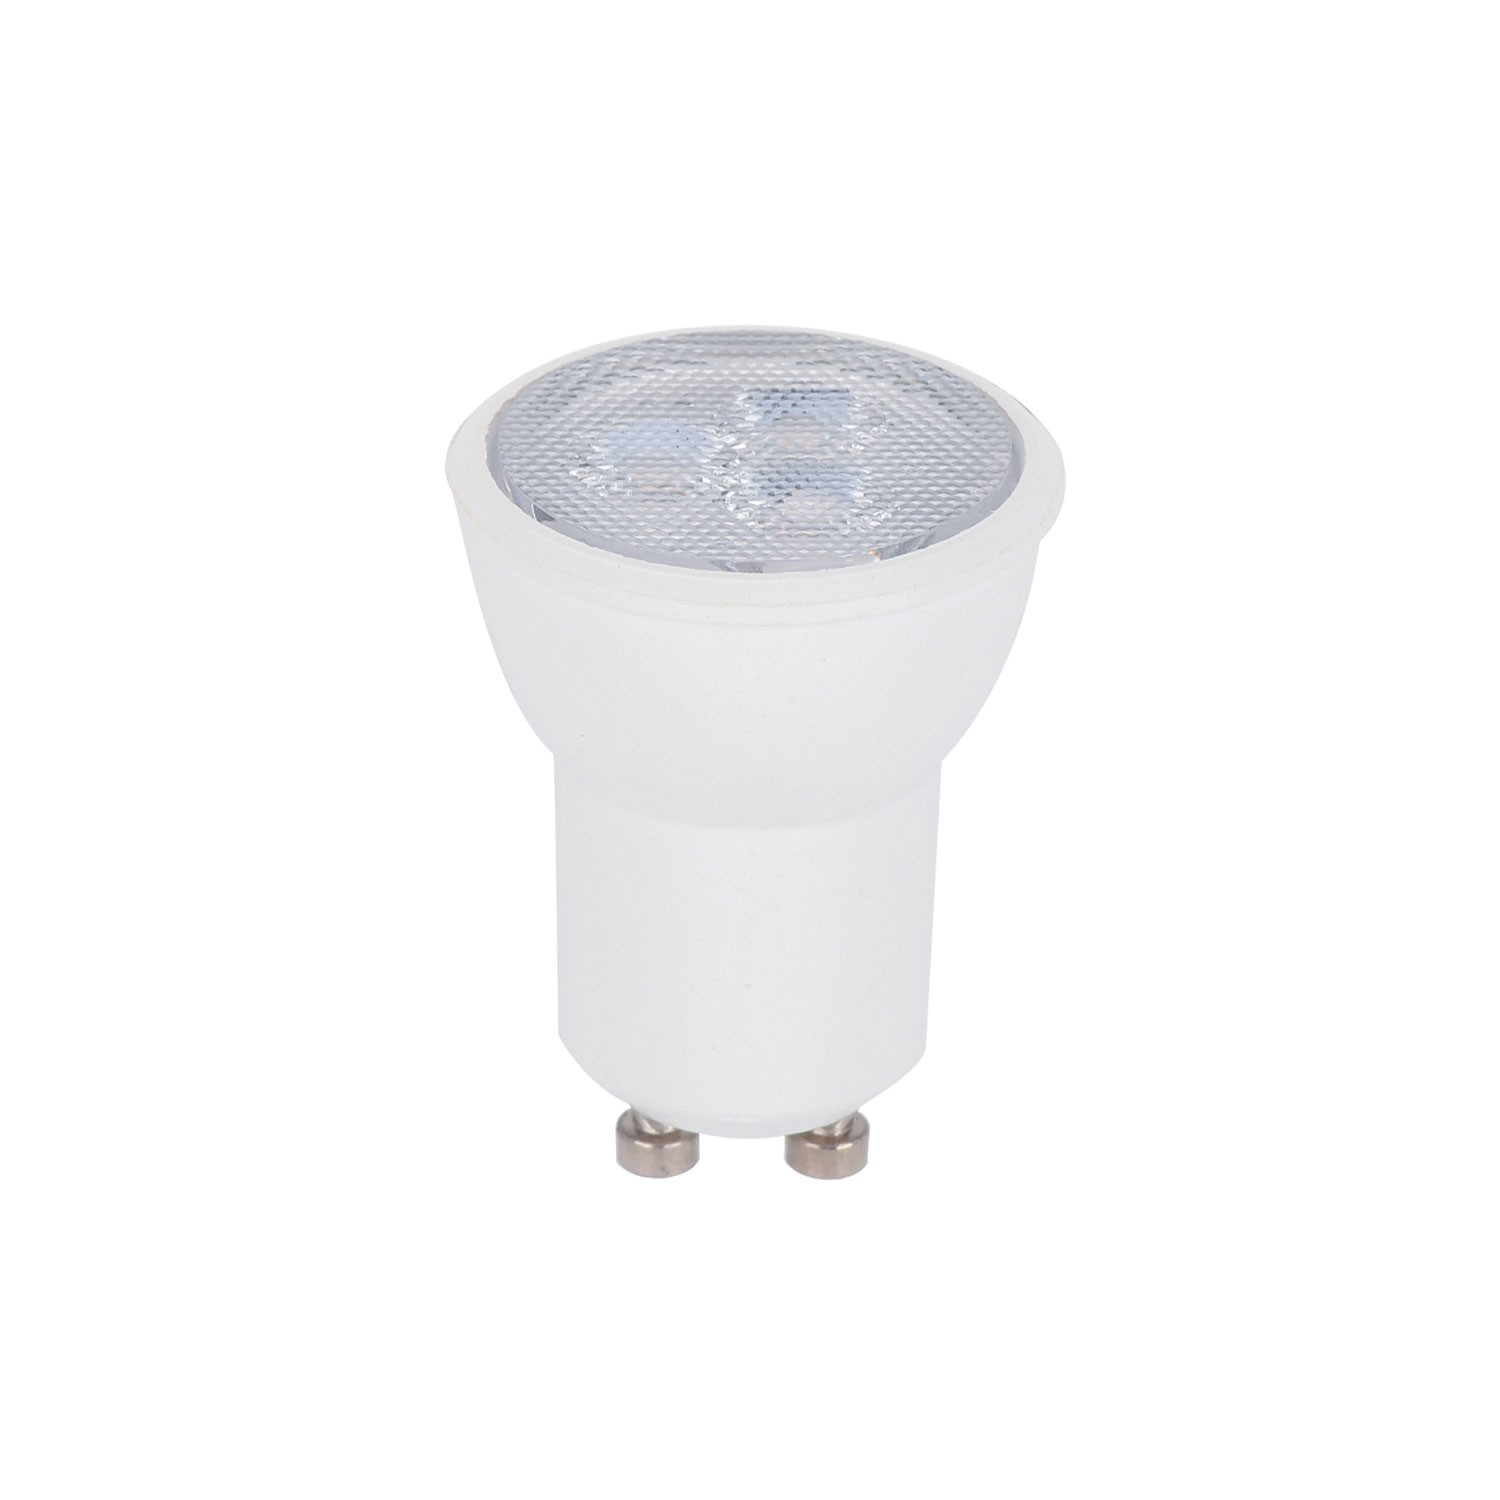 Spostaluce lamp verstelbaar Flex 30 met GU1d0 spotlamp